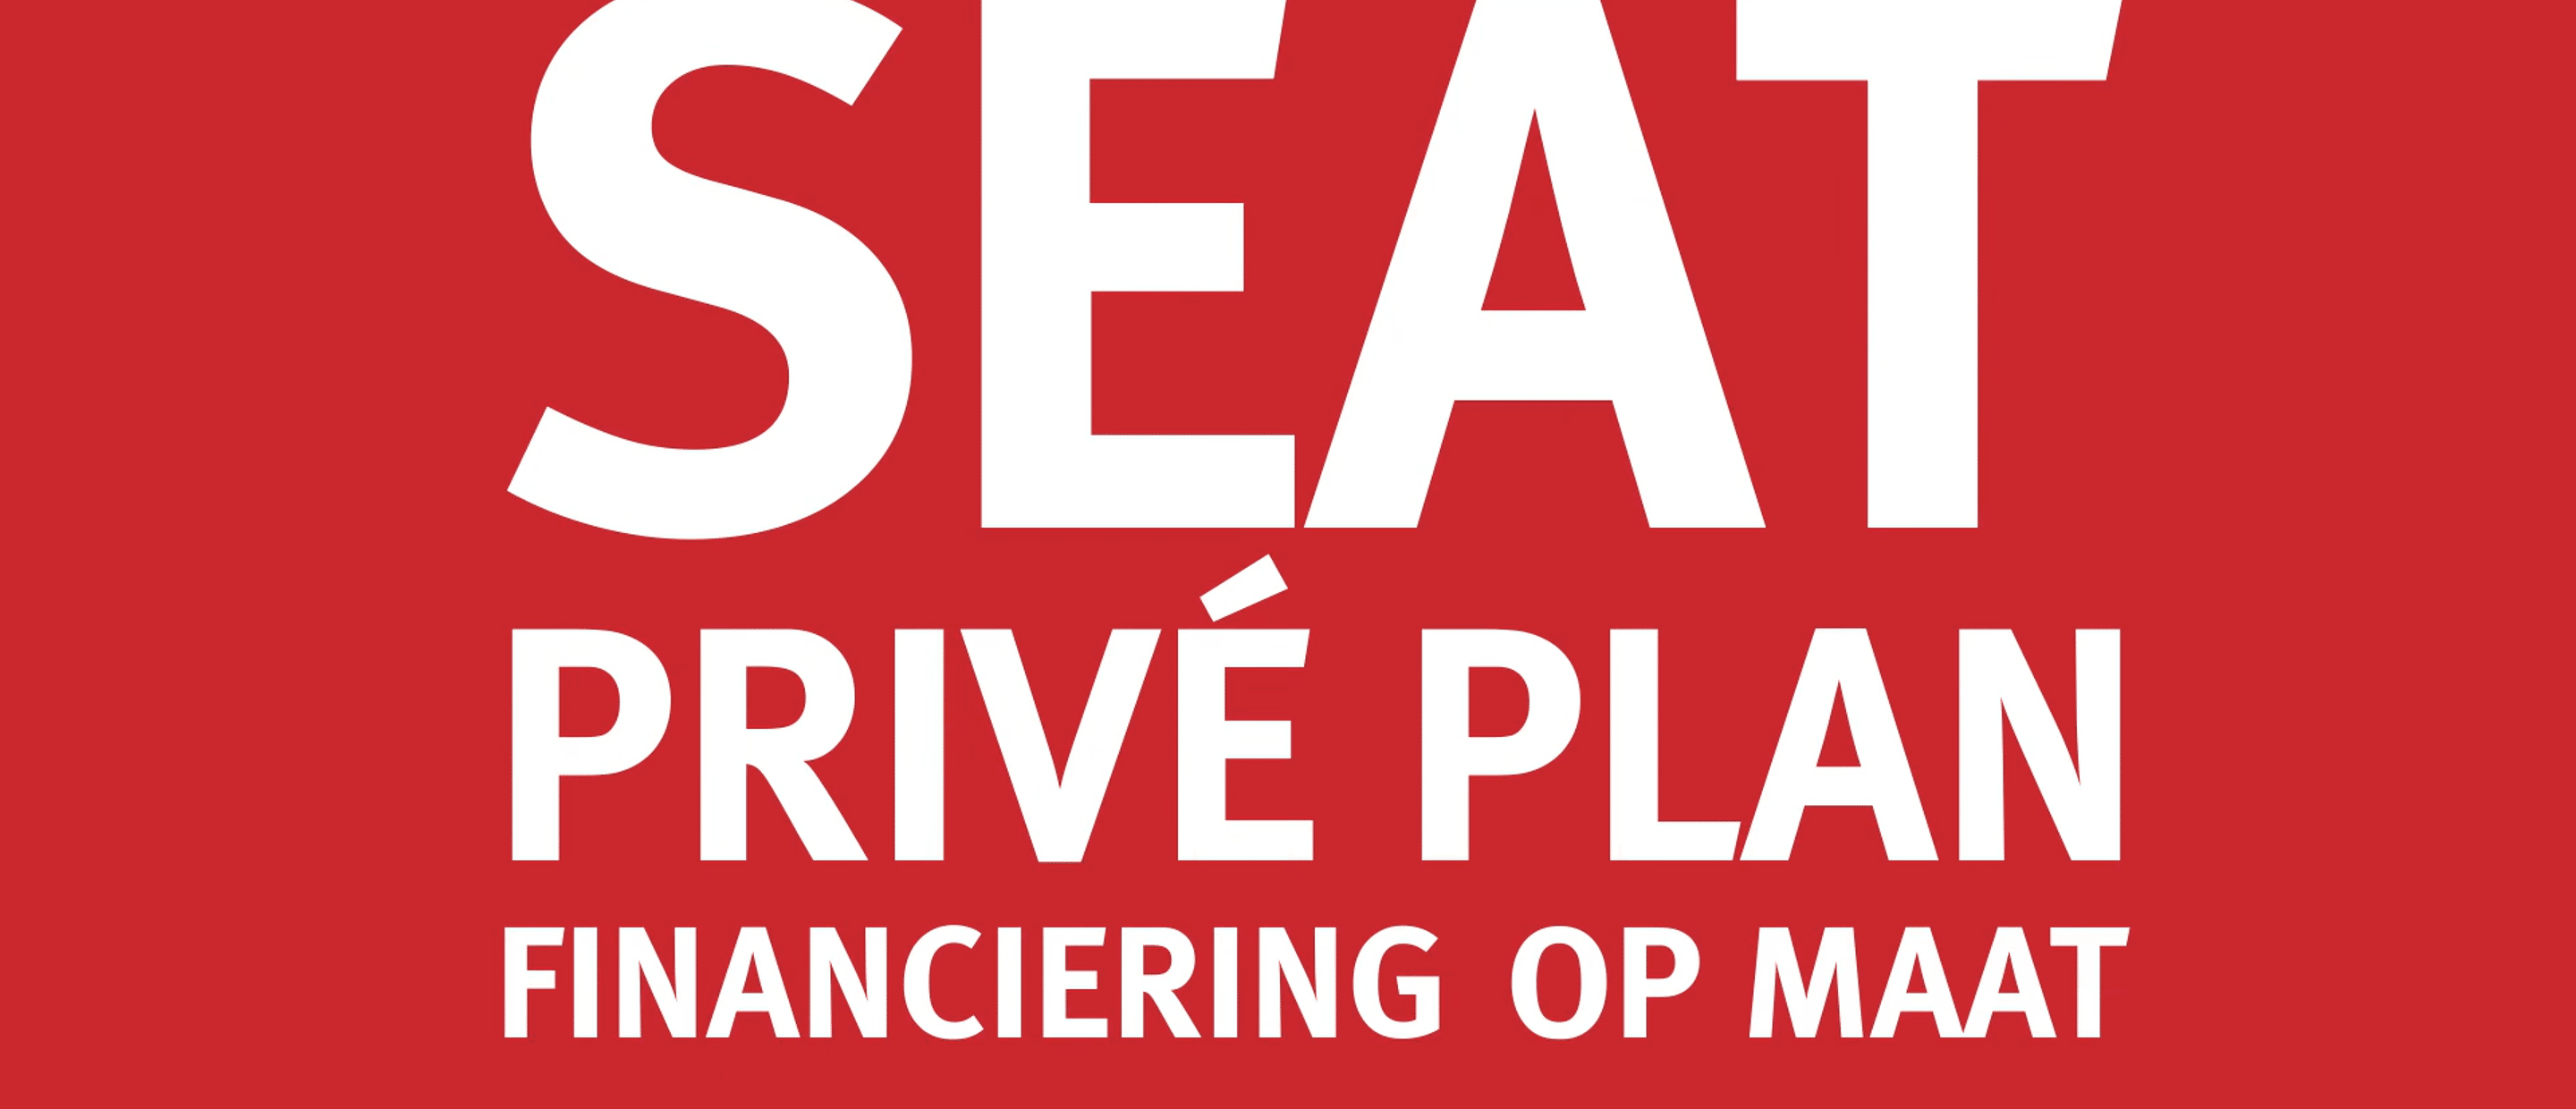 Het SEAT Privé Plan in 1 minuut